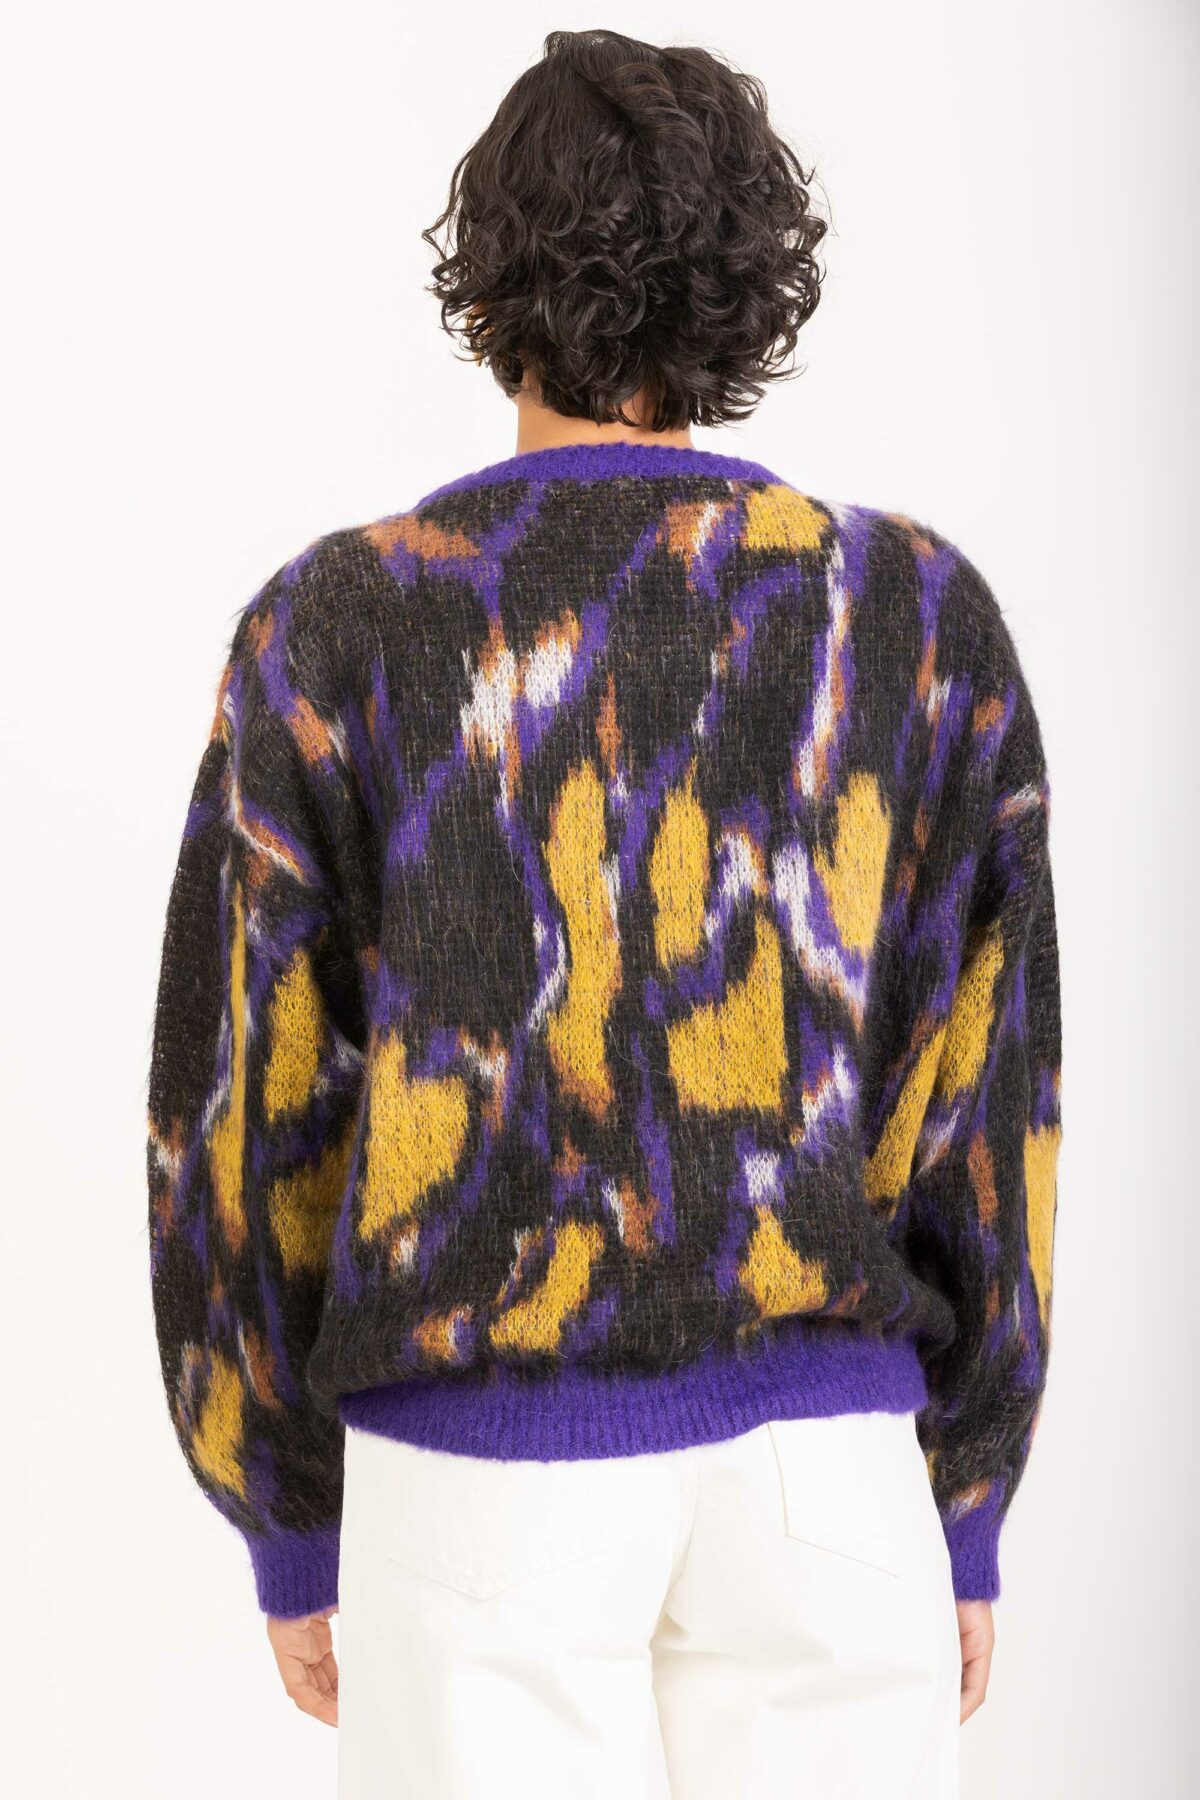 panthere-oversize-sweater-purple-leopard-mohair-lapetitefrancaise-matchboxathens